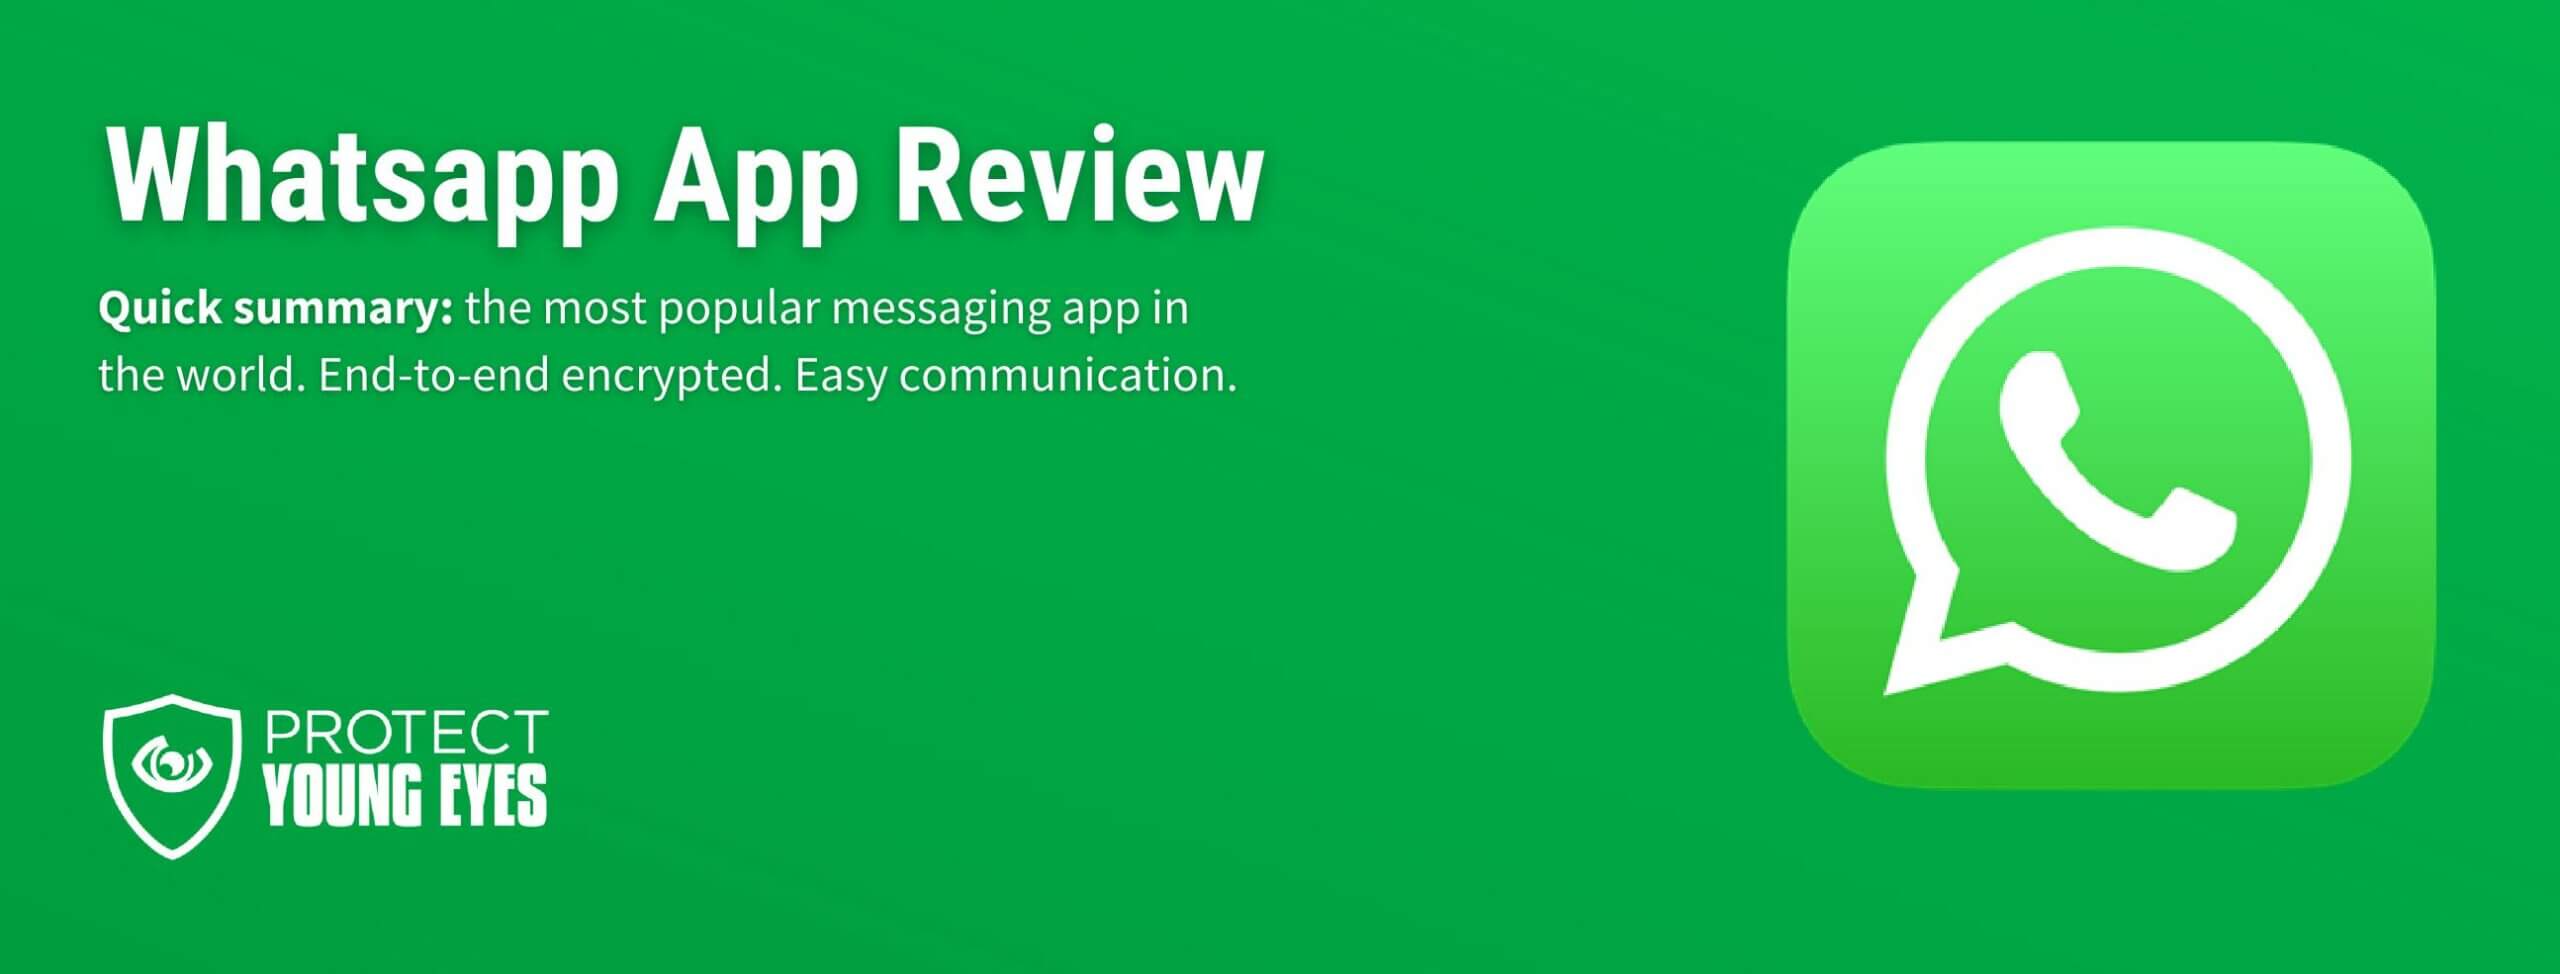 Whatsapp - Header Image - PYE App Review